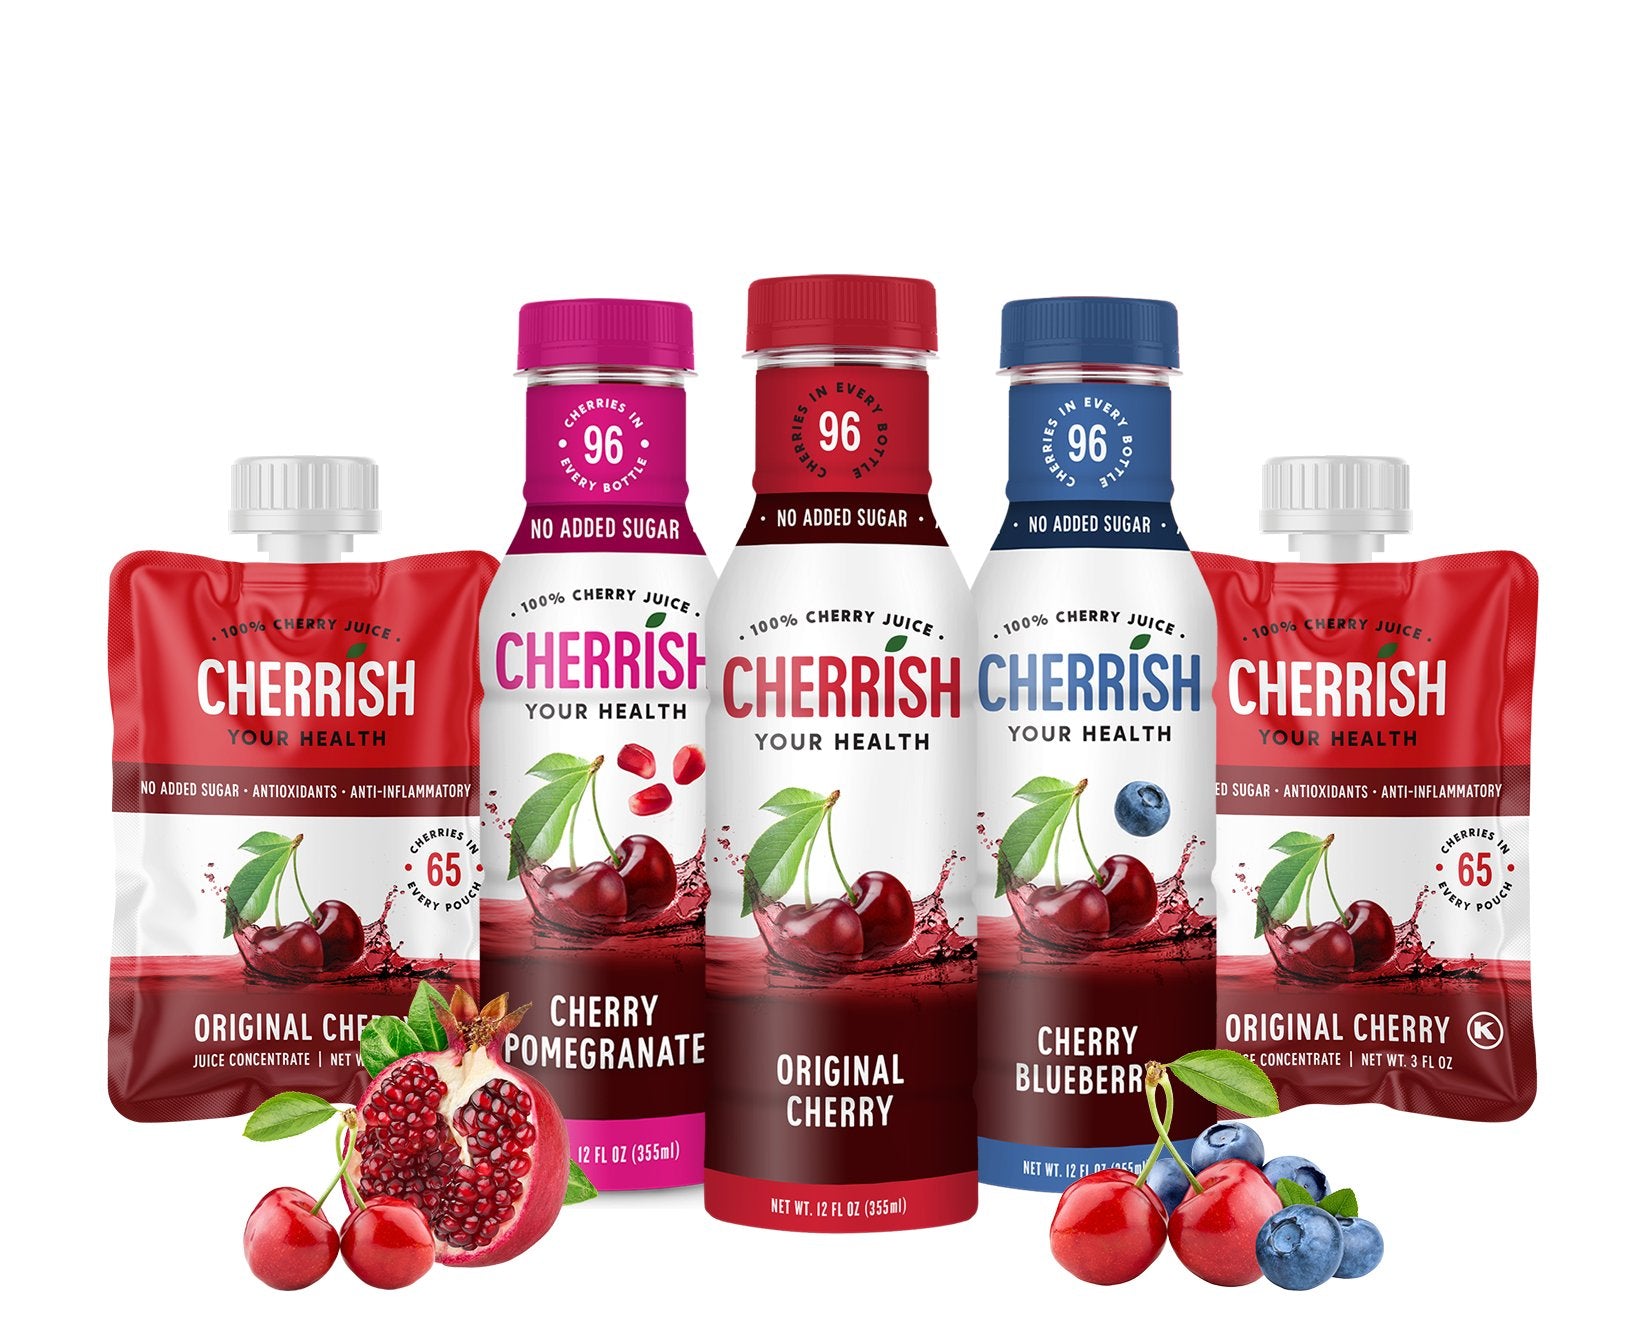 Tart cherry juice for cancer prevention